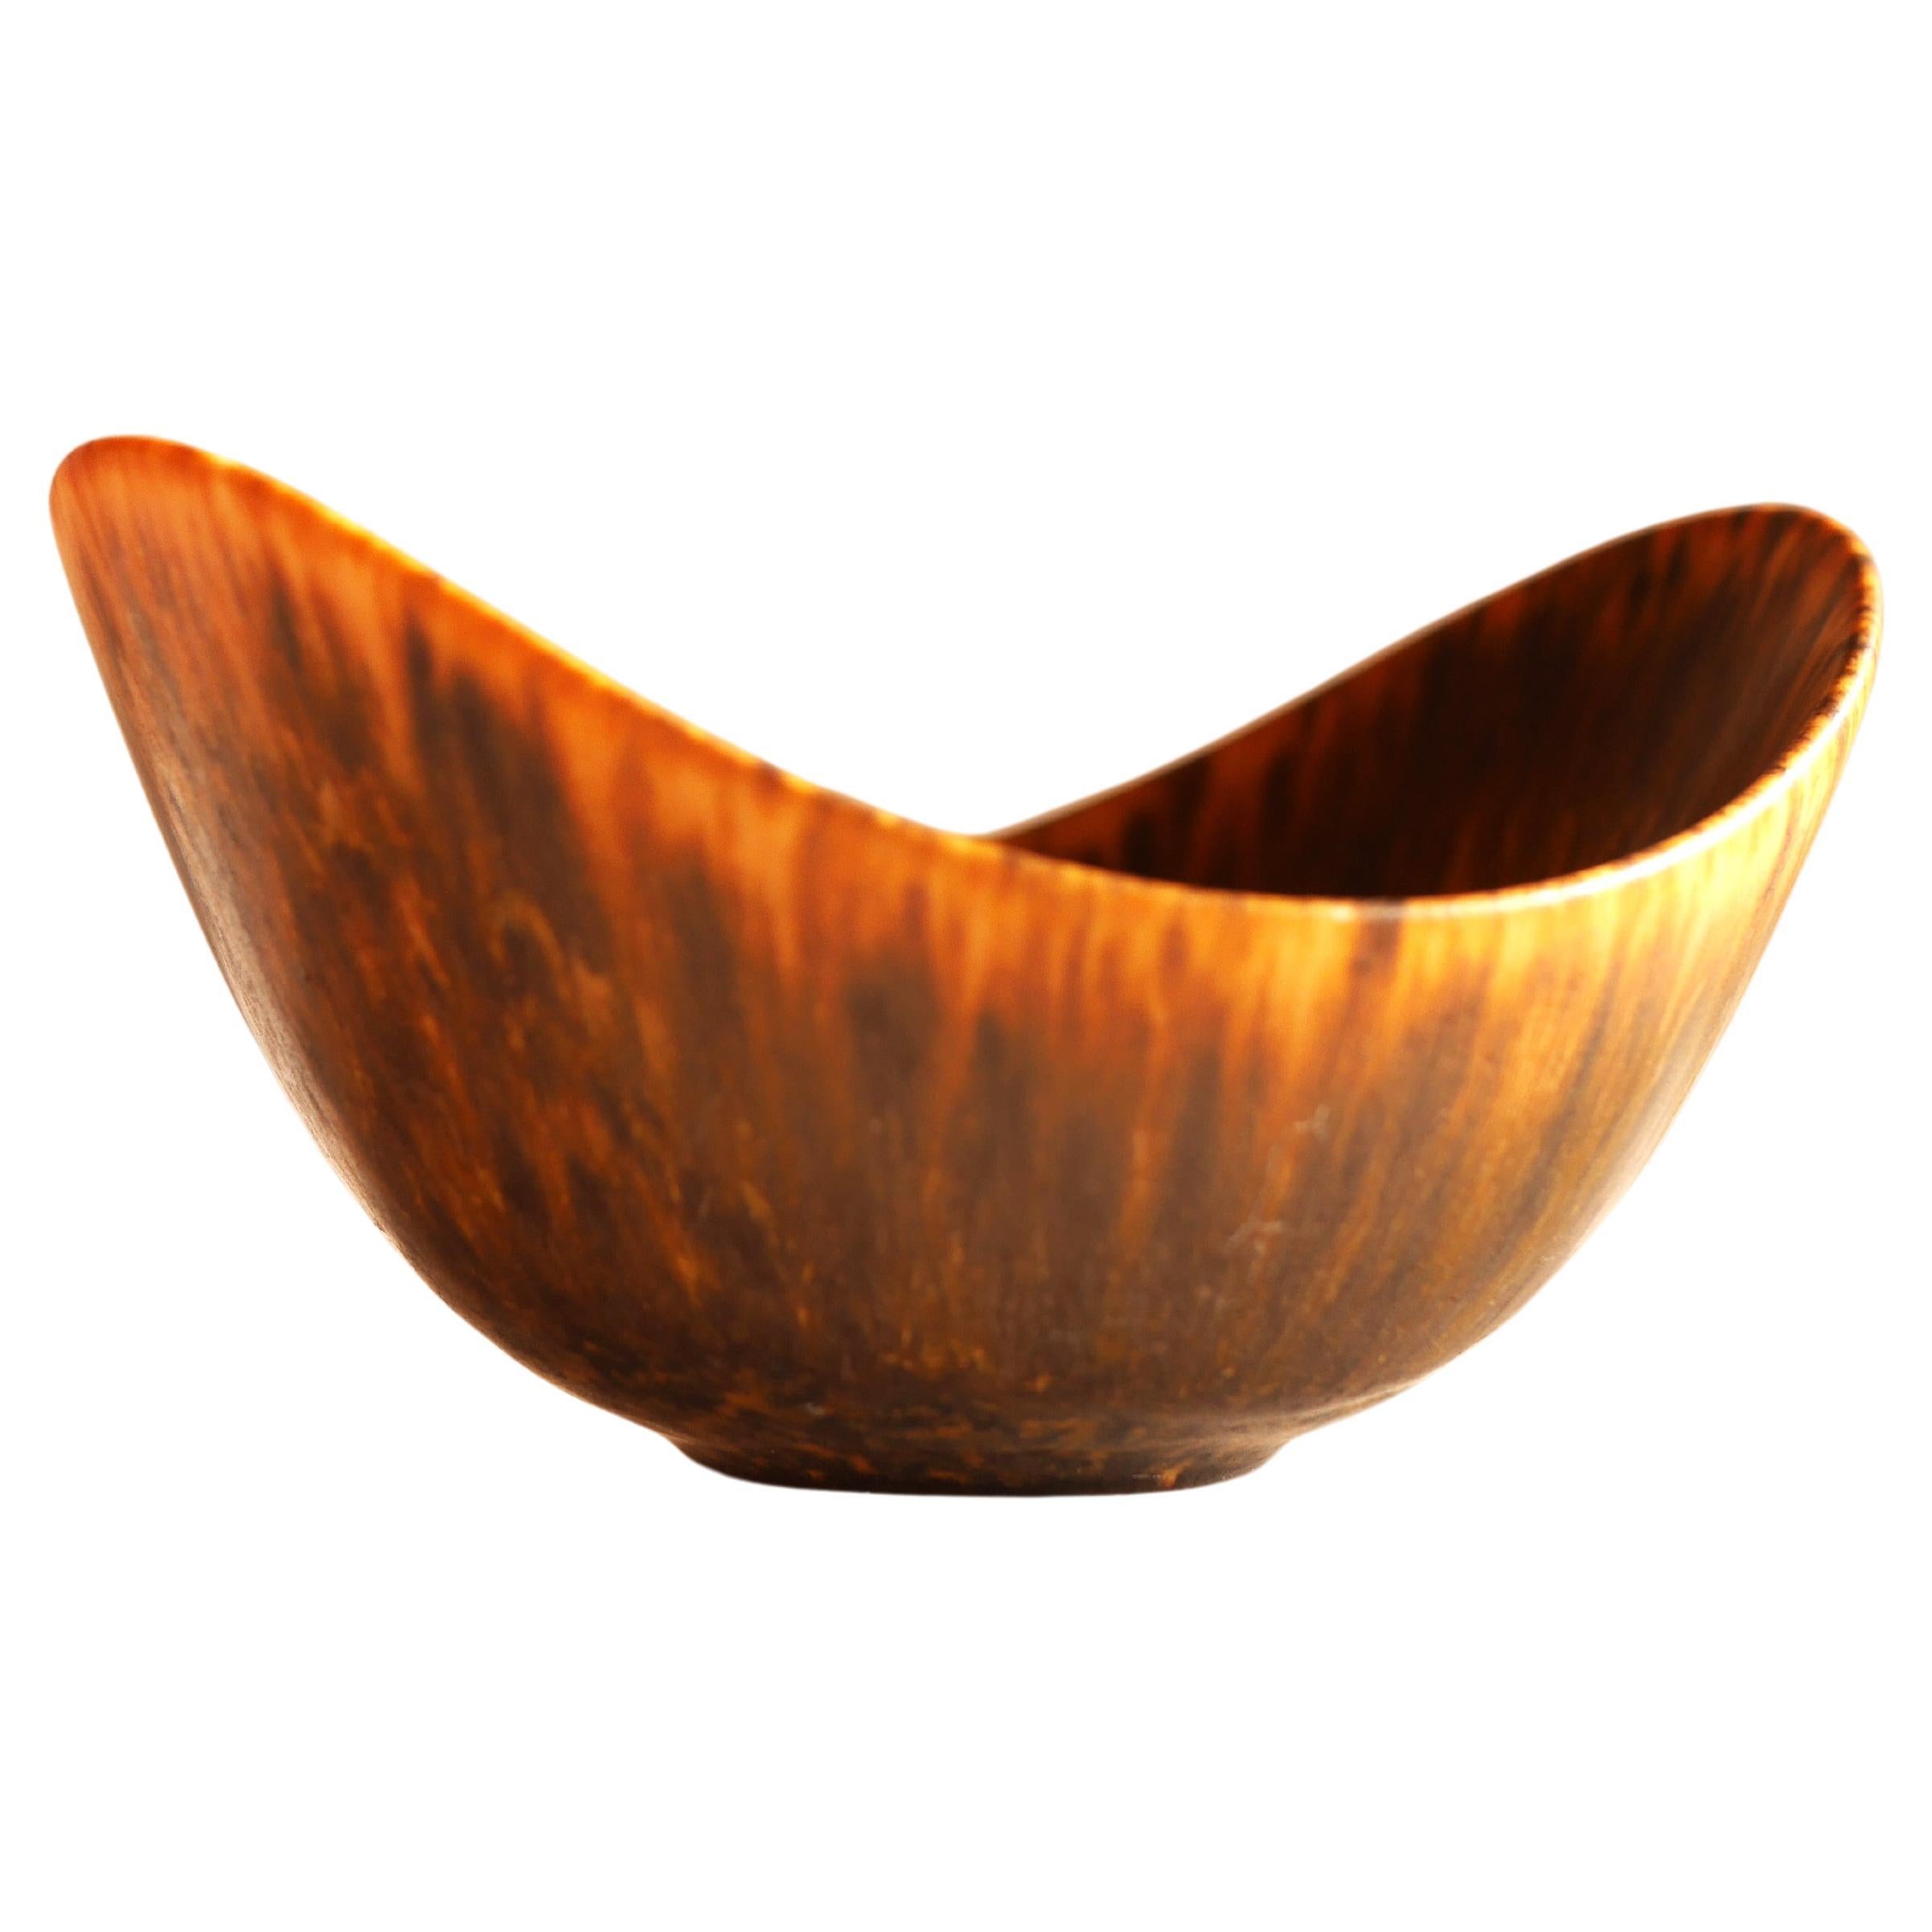 Ceramic miniature bowl known as "ARU" by Gunnar Nylund for Rörstrand, Sweden